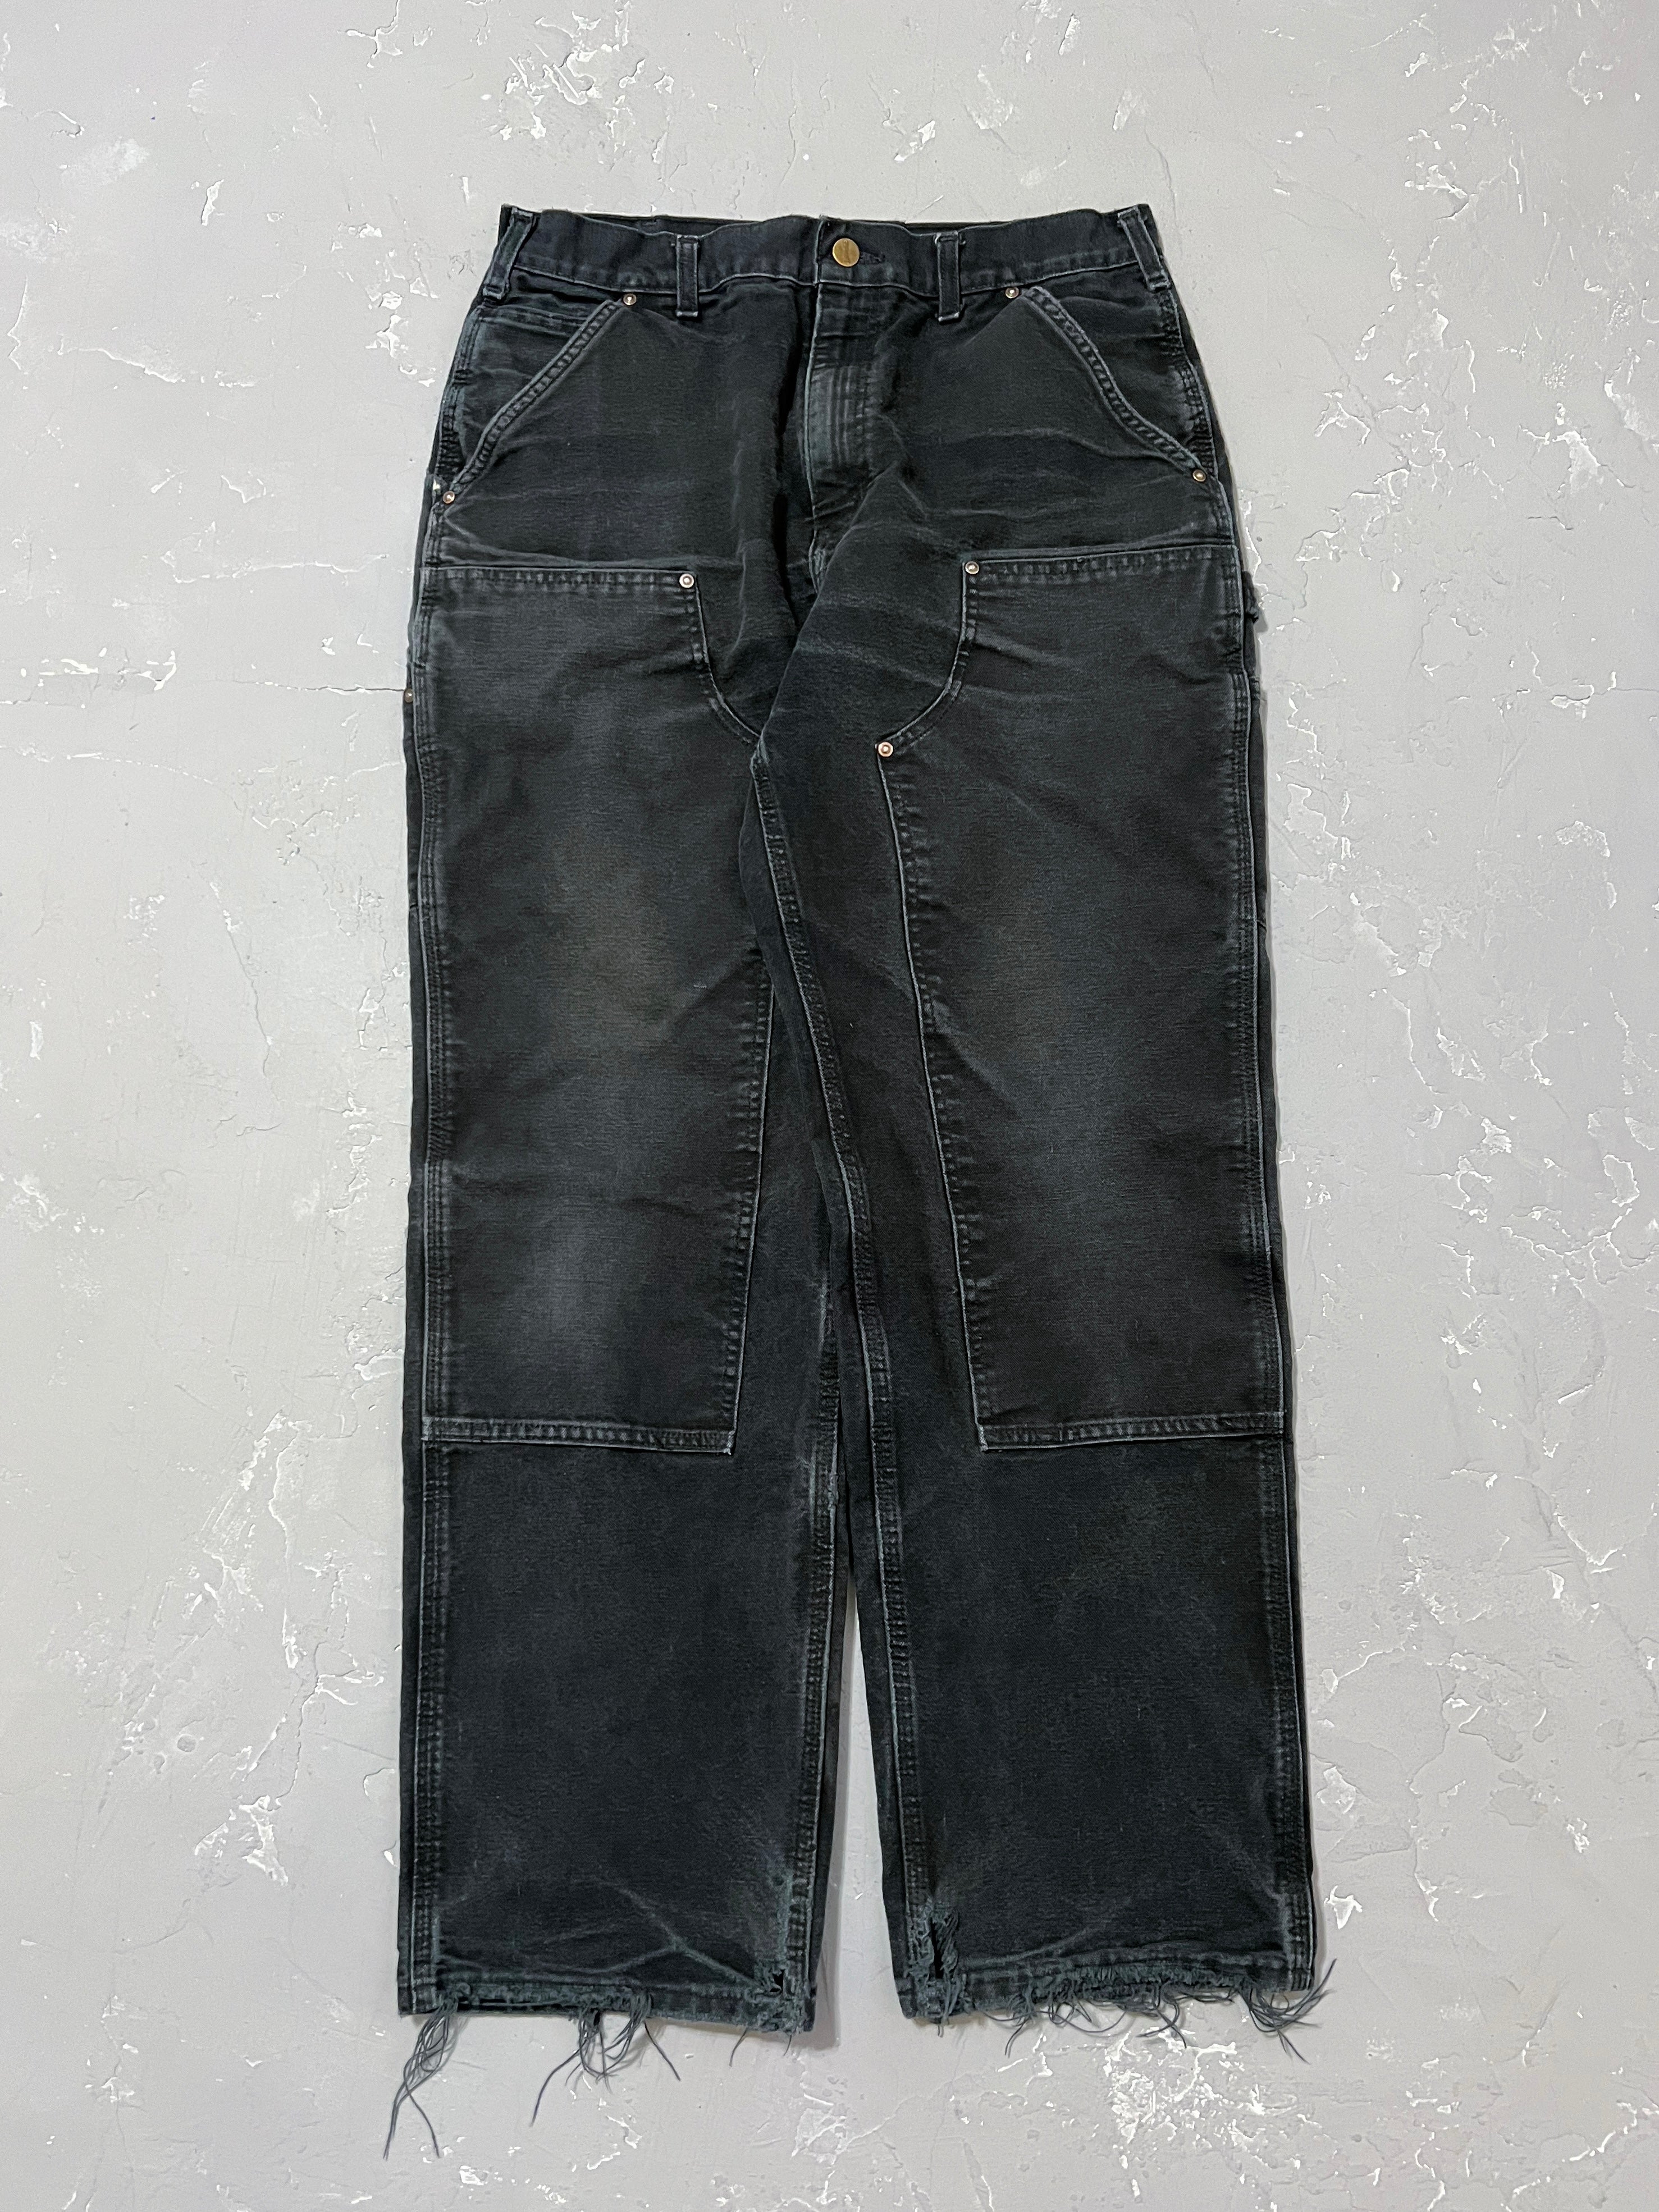 Carhartt Black Double Knee Pants [32 x 32]